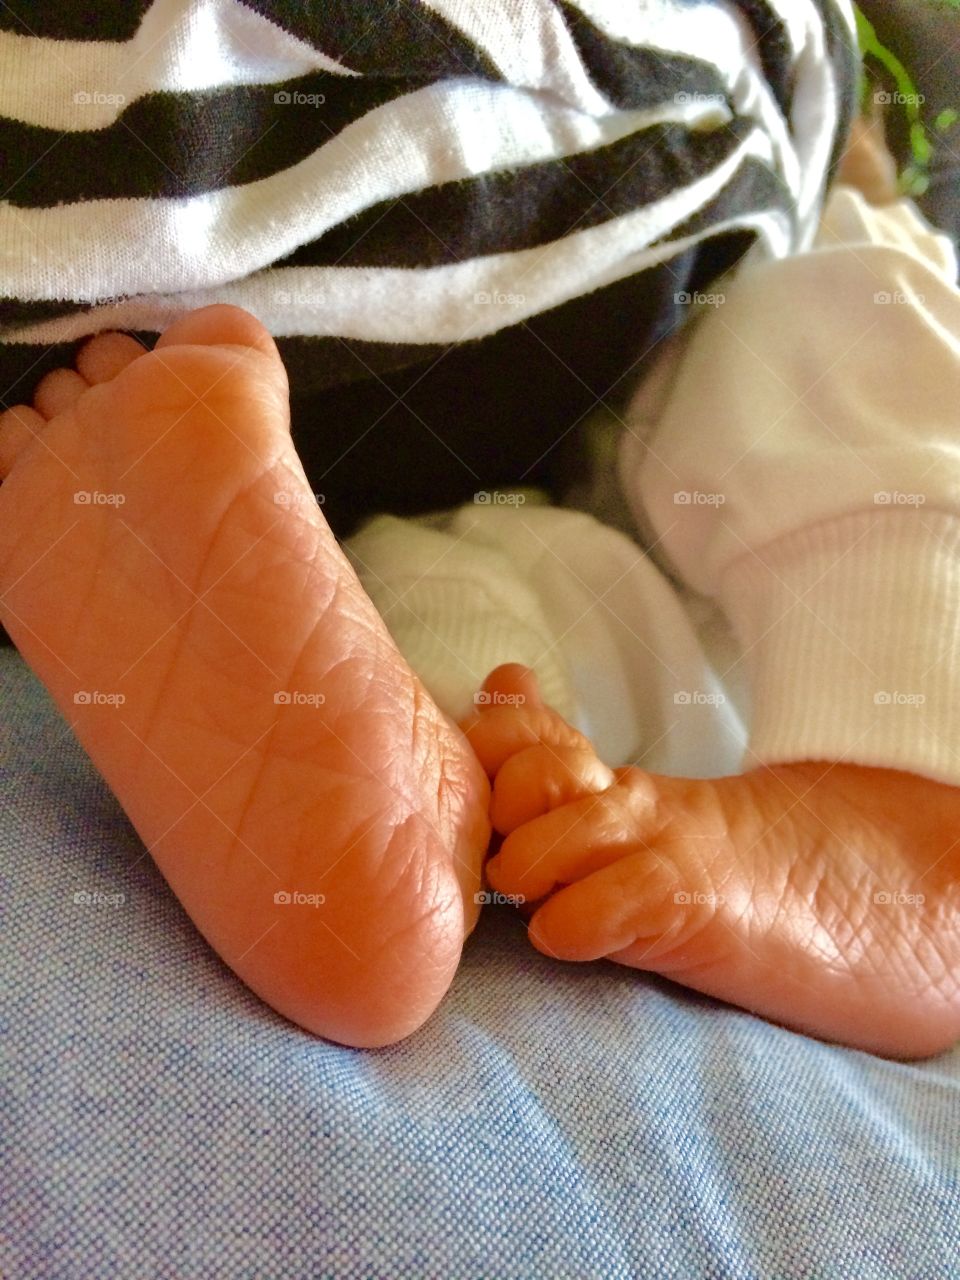 Kiruna kommun, sweden
Newborn baby